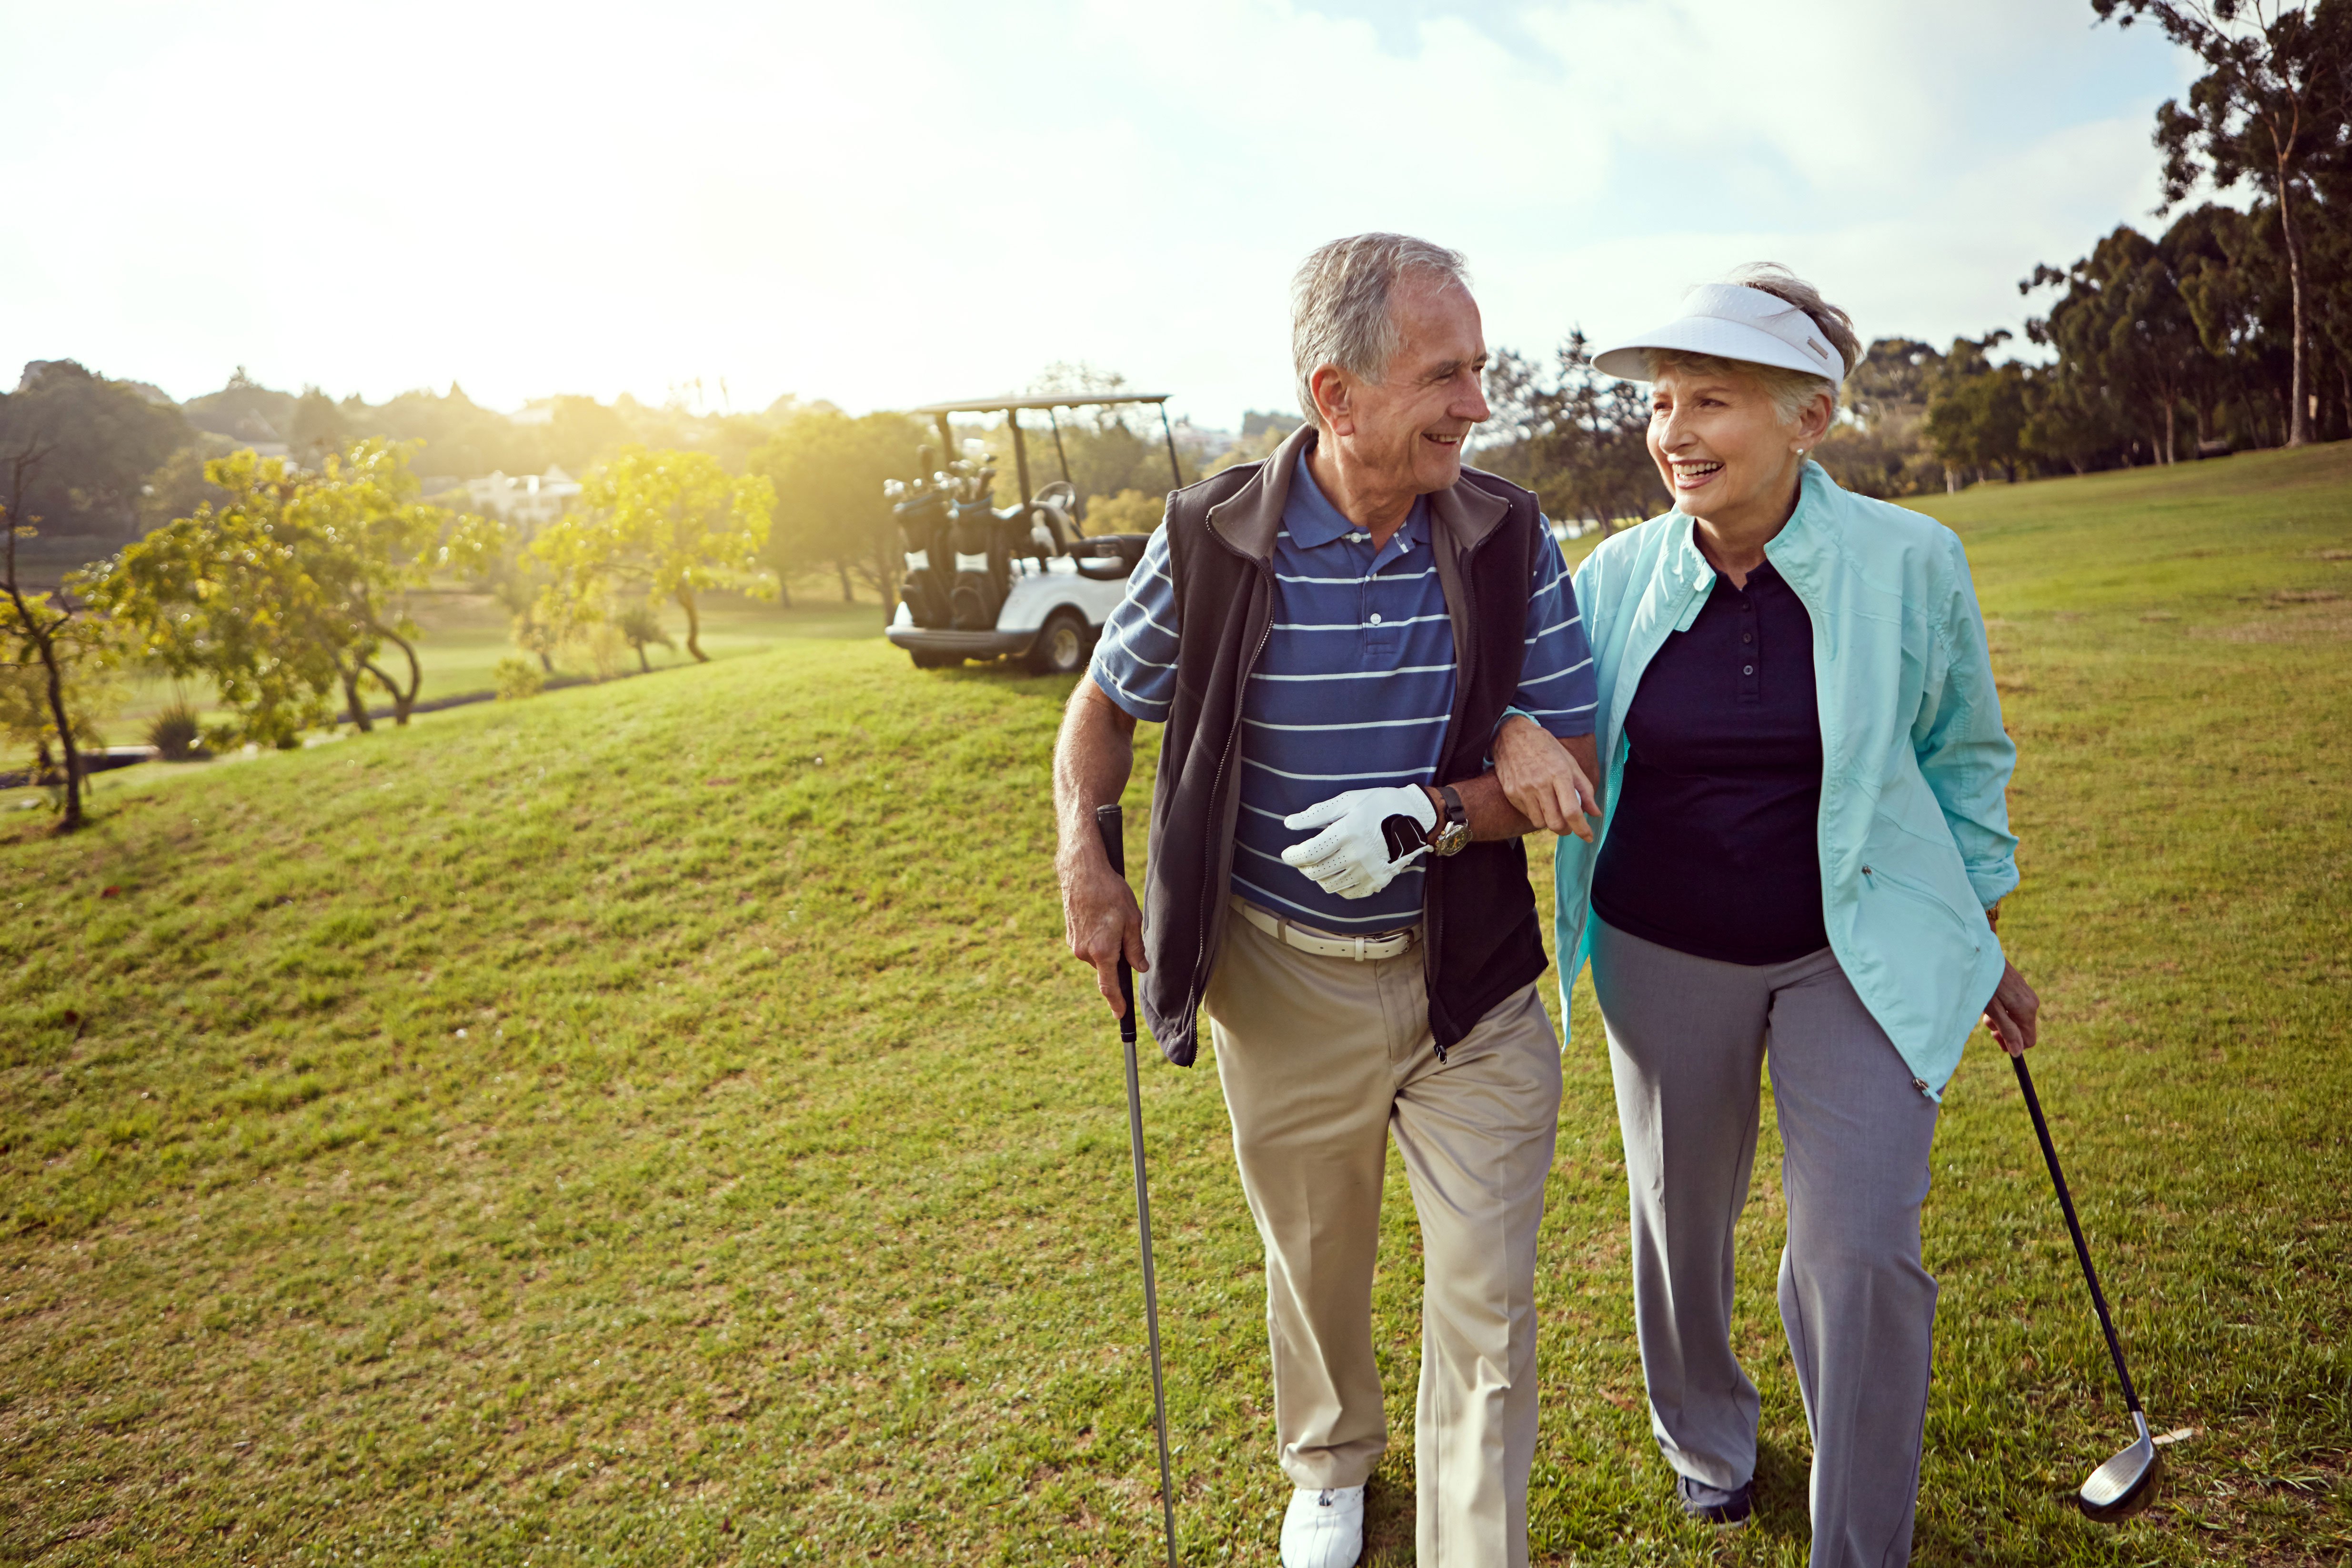 A happy senior couple enjoys an active day on the golf course